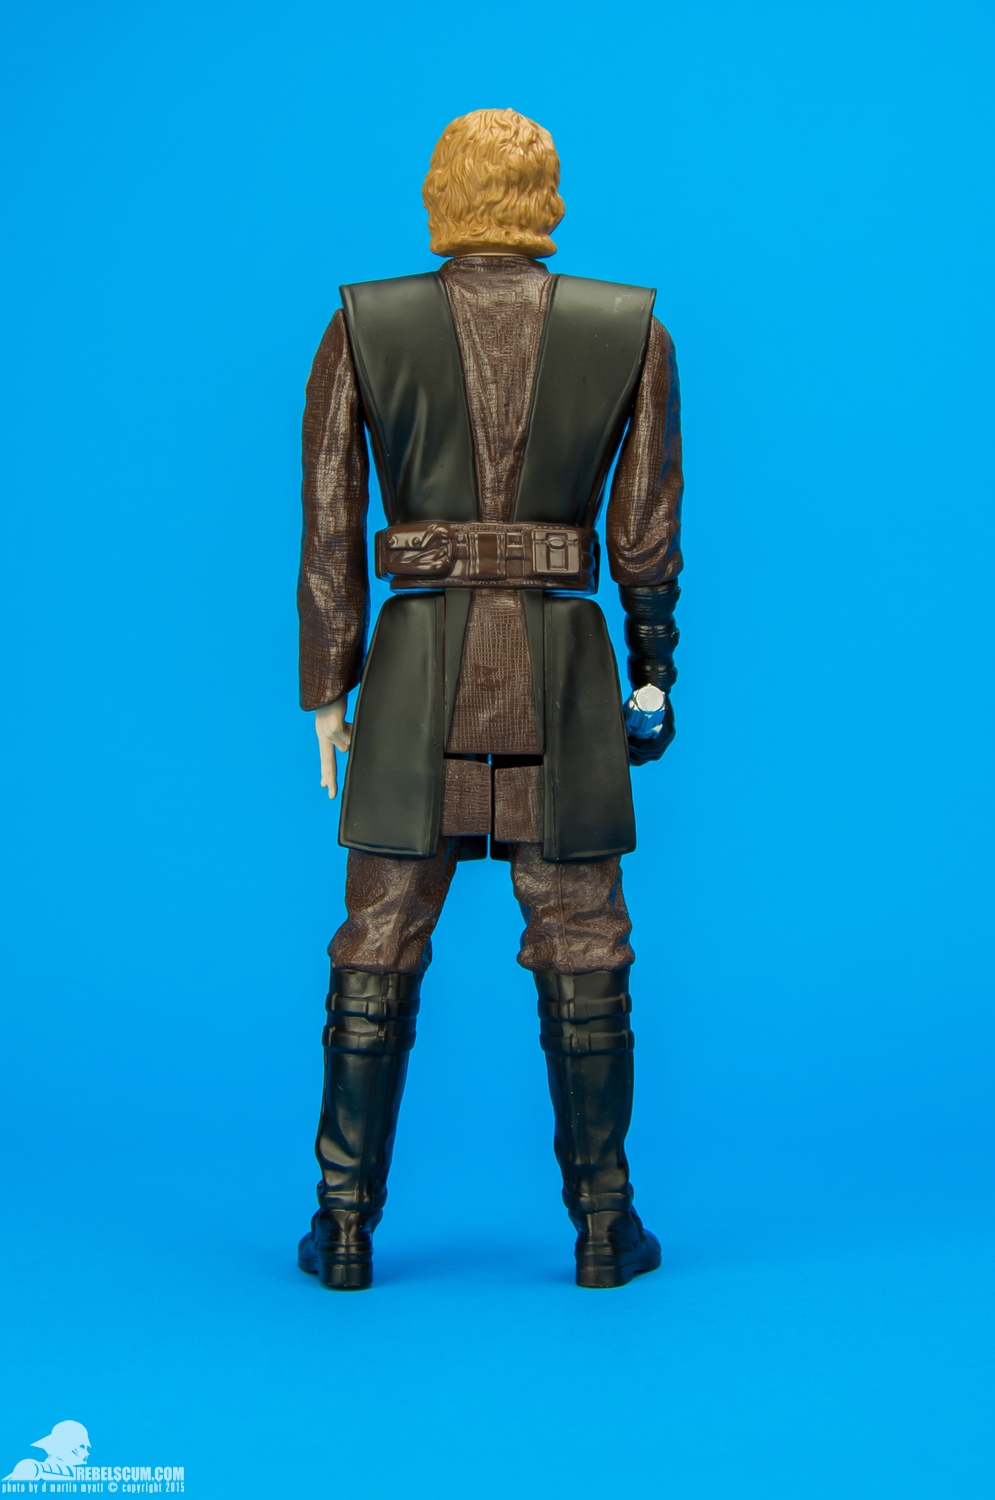 Anakin-Skywalker-2013-Star-Wars-12-Inch-Figure-004.jpg